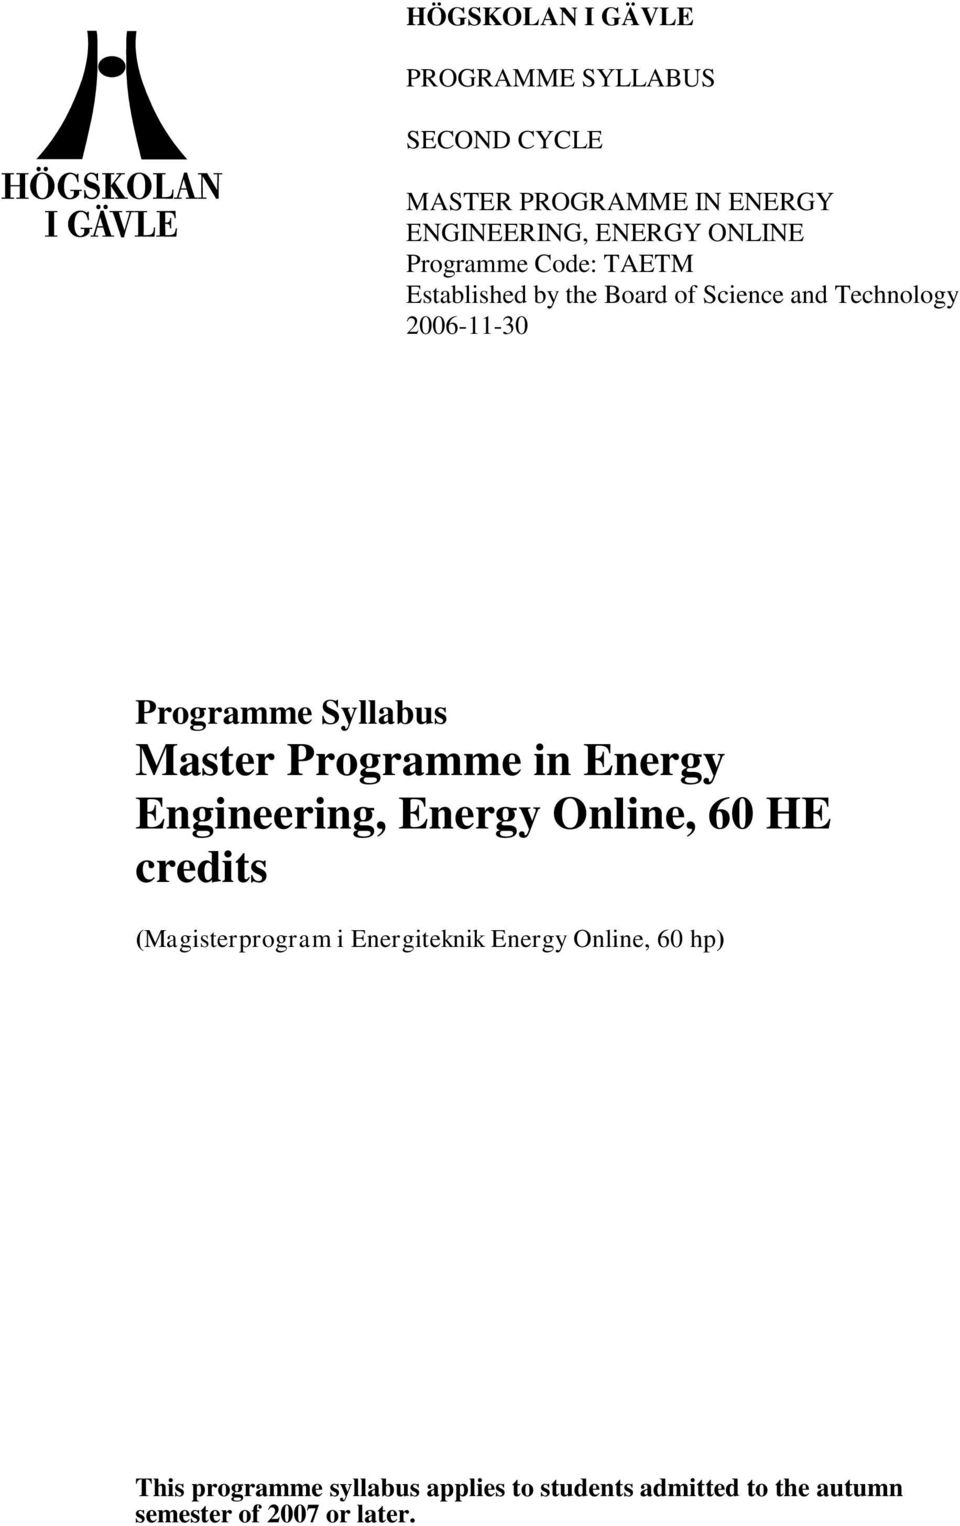 Master Programme in Energy Engineering, Energy Online, 60 HE credits (Magisterprogram i Energiteknik